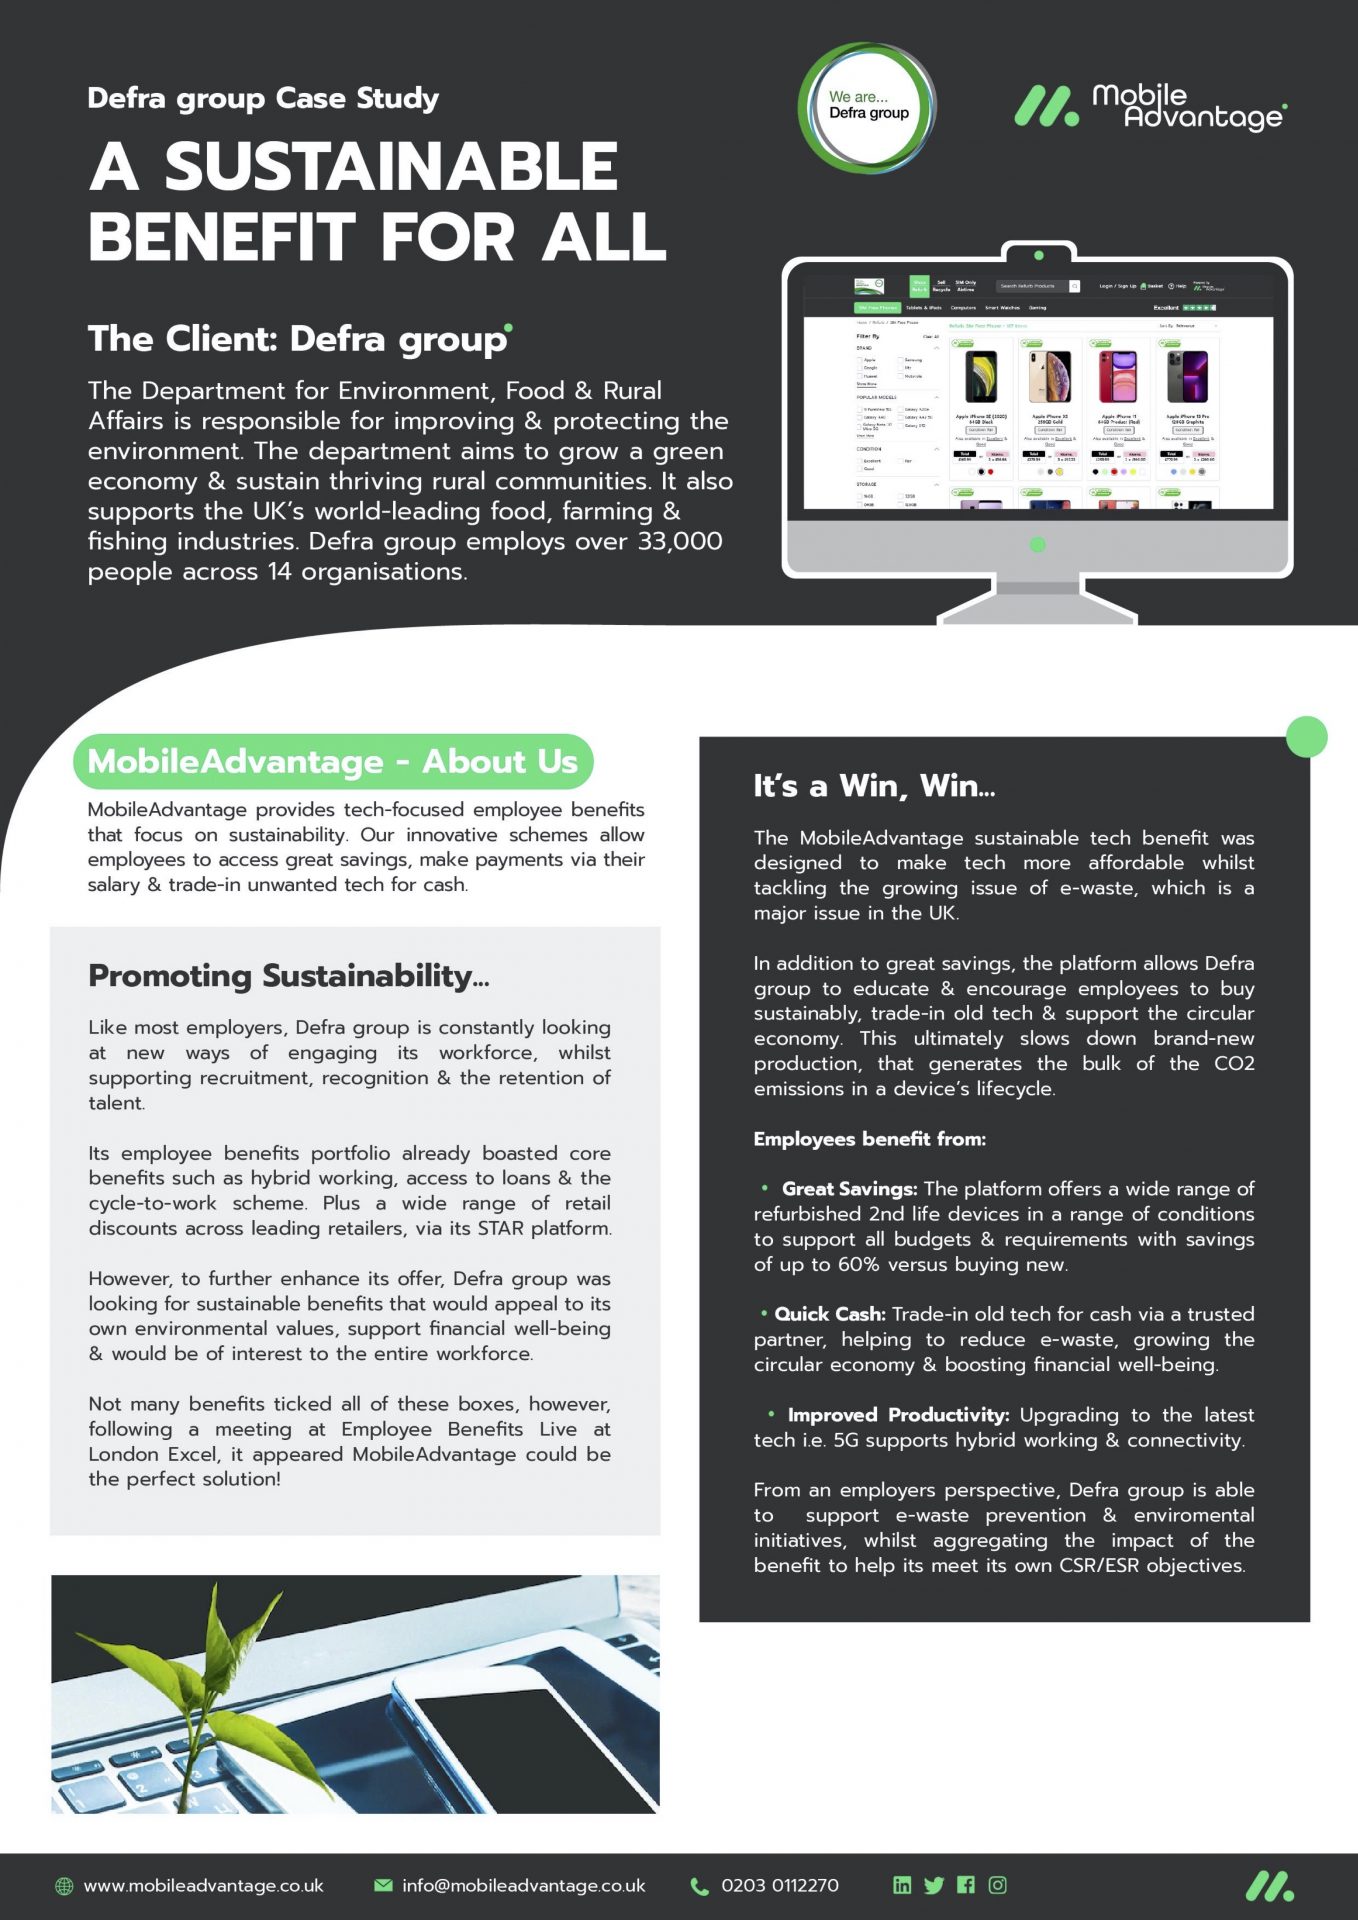 Defra Group Case Study - Back Page